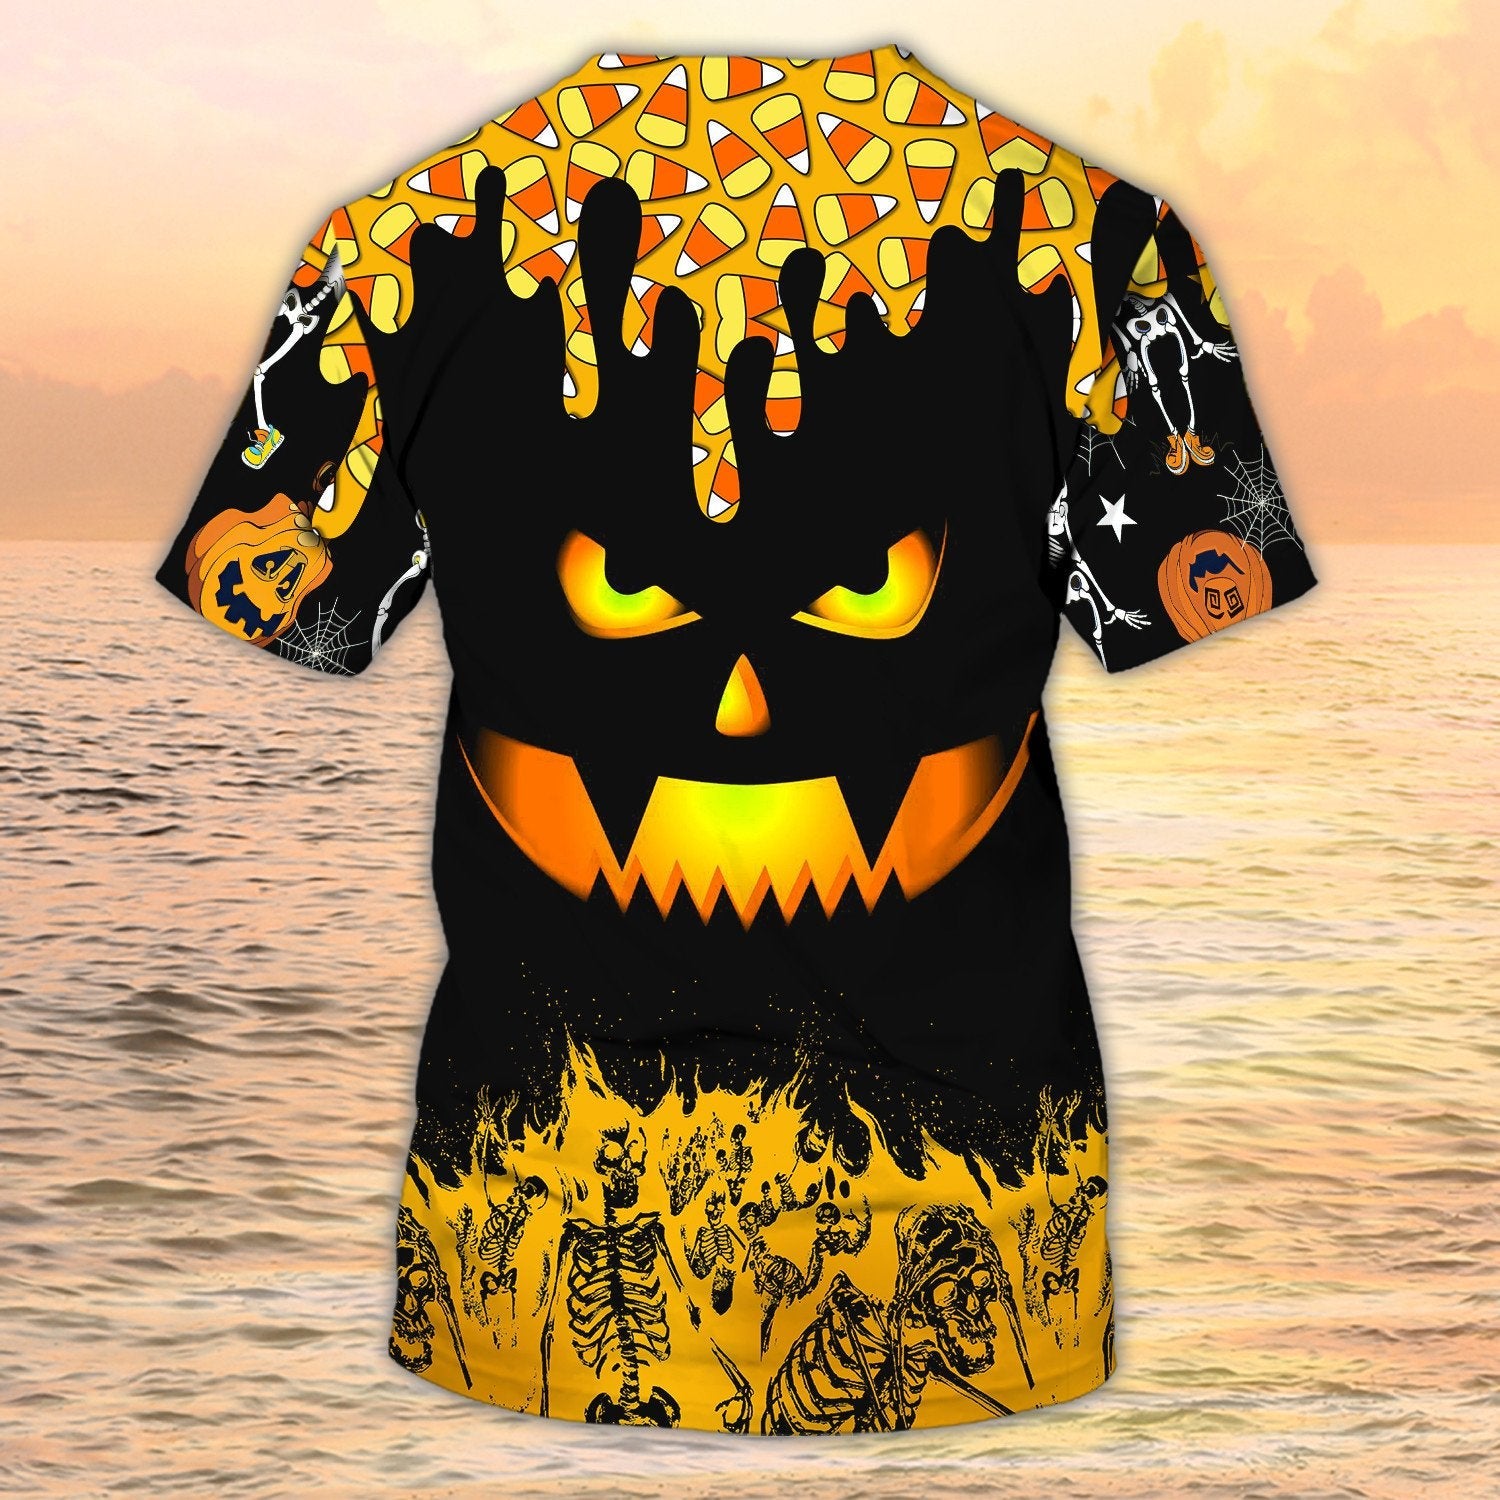 Funny Halloween Shirts Black And Yellow Pumpkin 3D Shirt For Halloween